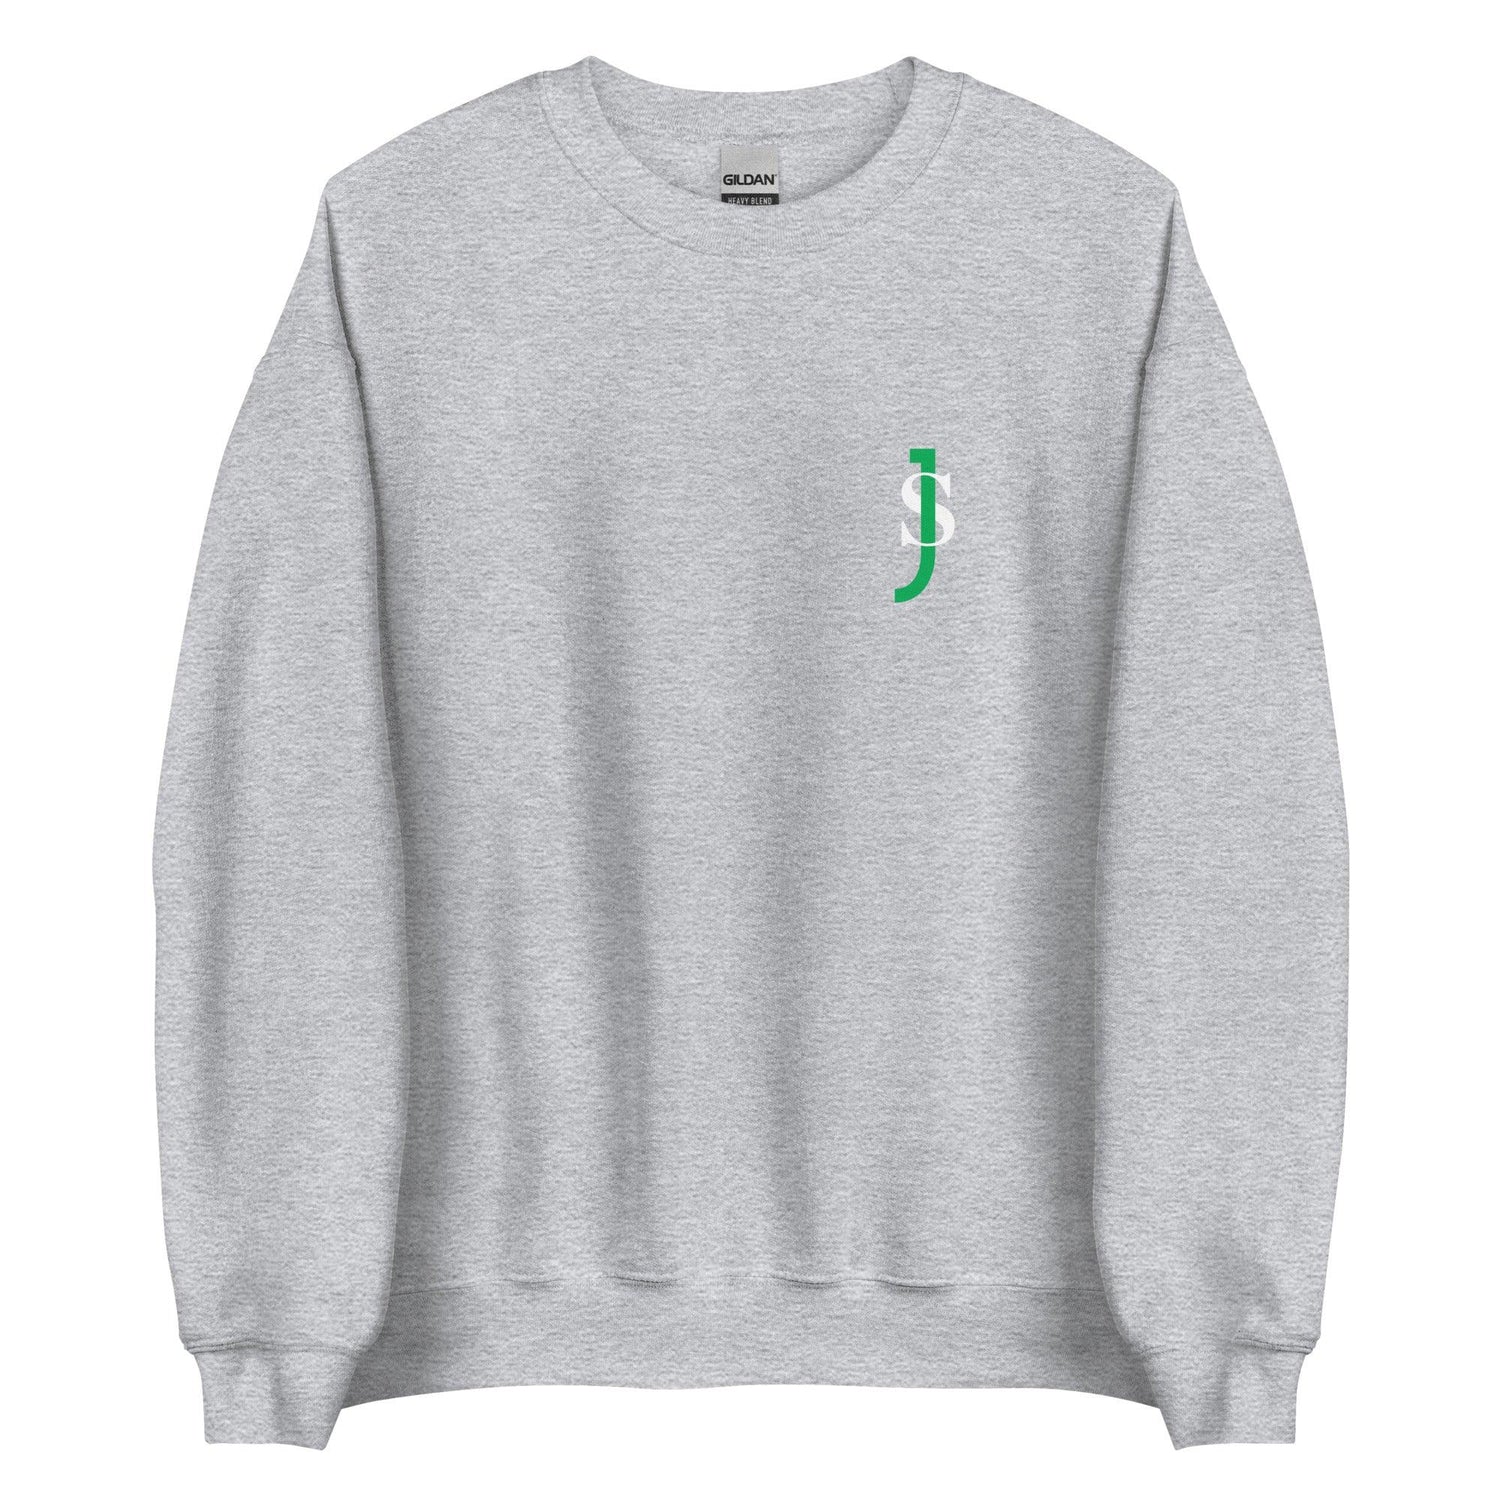 Jyaire Shorter "Signature" Sweatshirt - Fan Arch